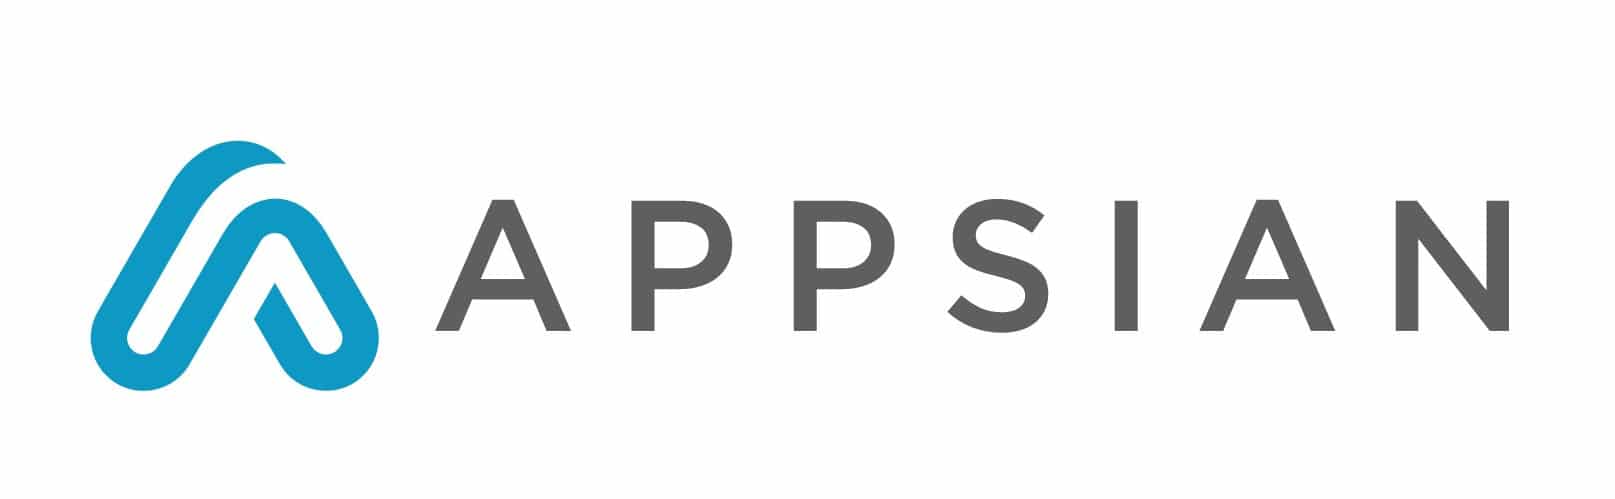 appsian-logo-color-5.jpg